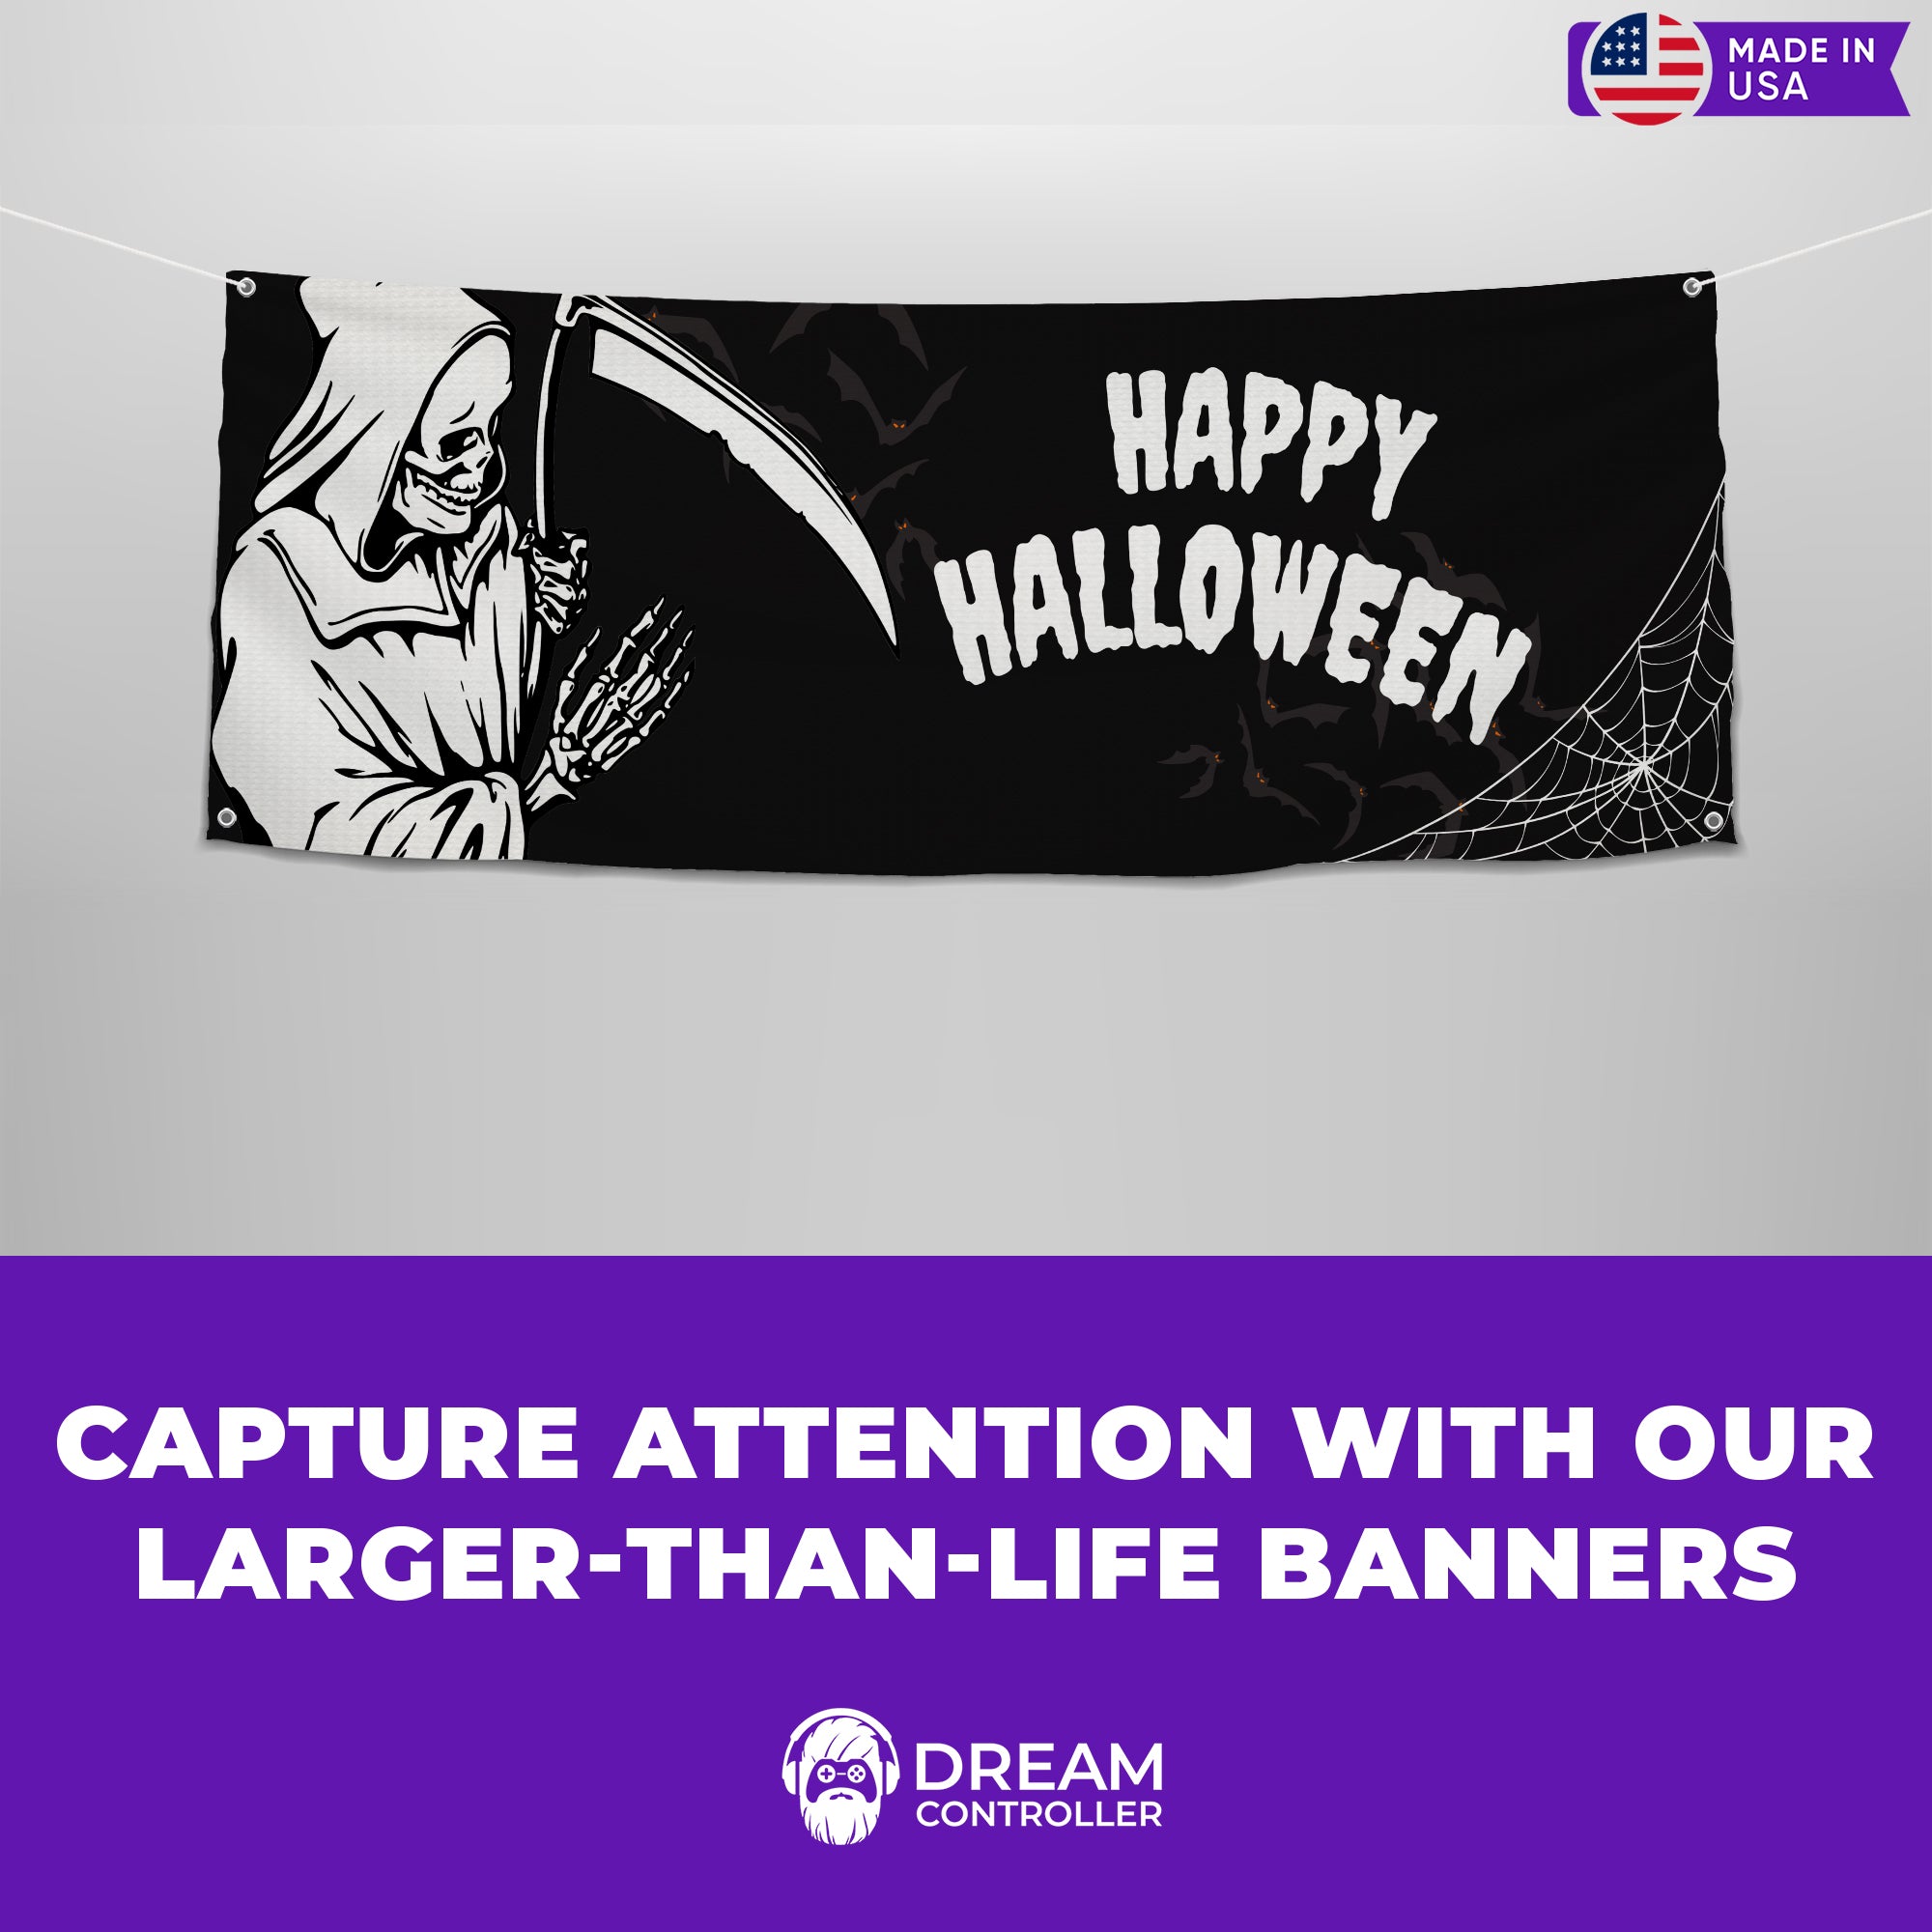 Reaper's Halloween Banner - Stunning Visual Impact, Sturdy Grommets, Versatile Display Options